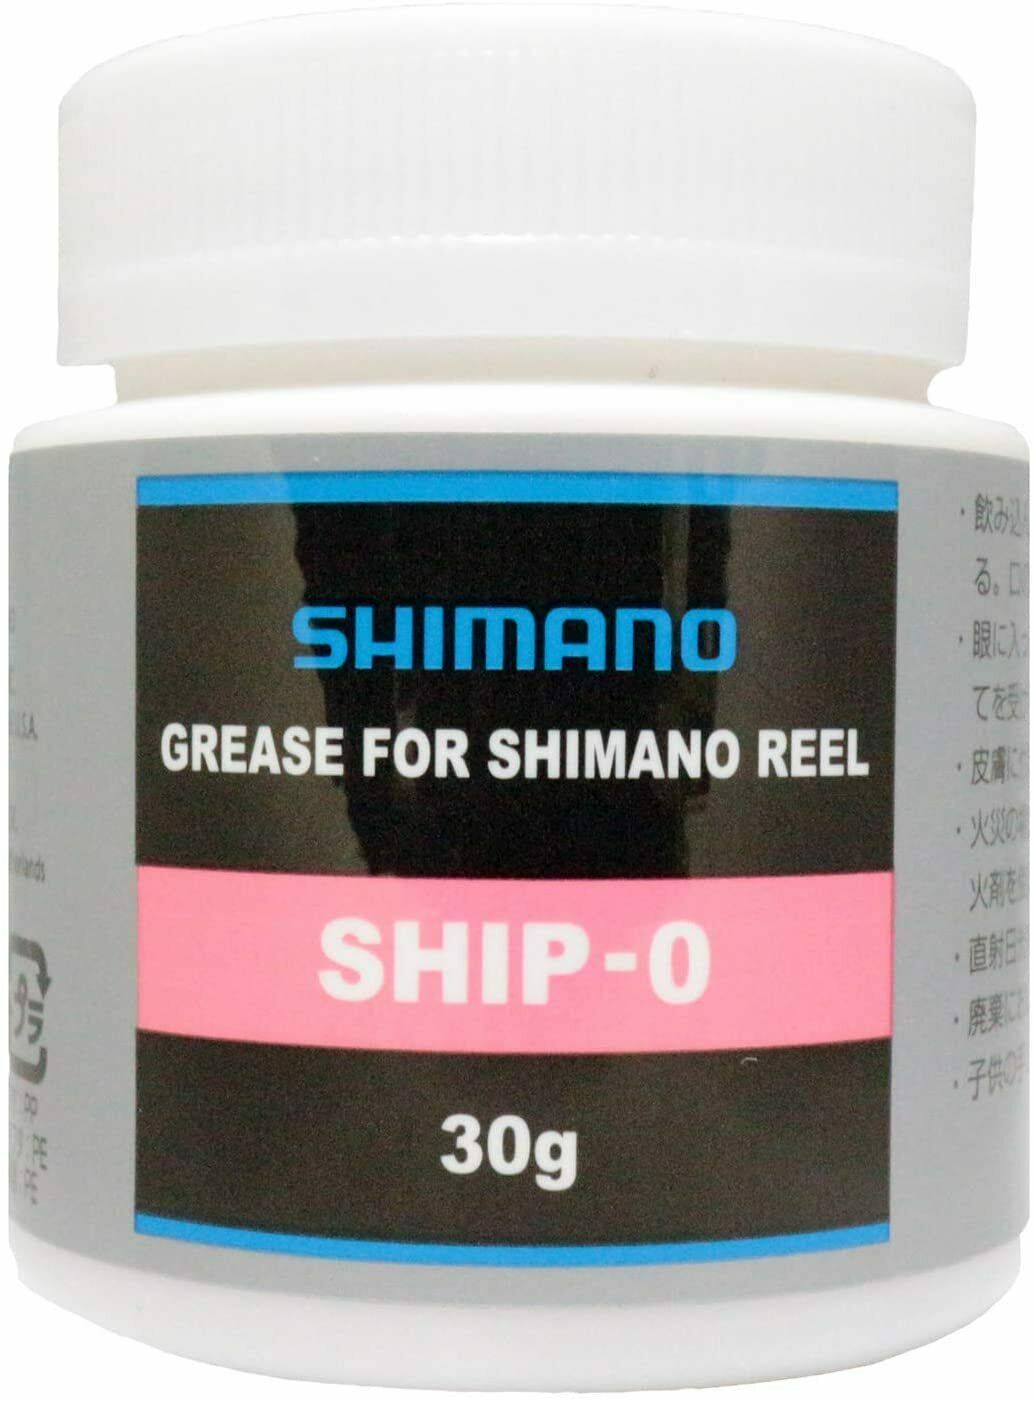 SHIMANO REEL GREASE / OIL SERVICE MAINTENANCE DG01 / SHIP-0 / PERMALUB /  ACE Etc